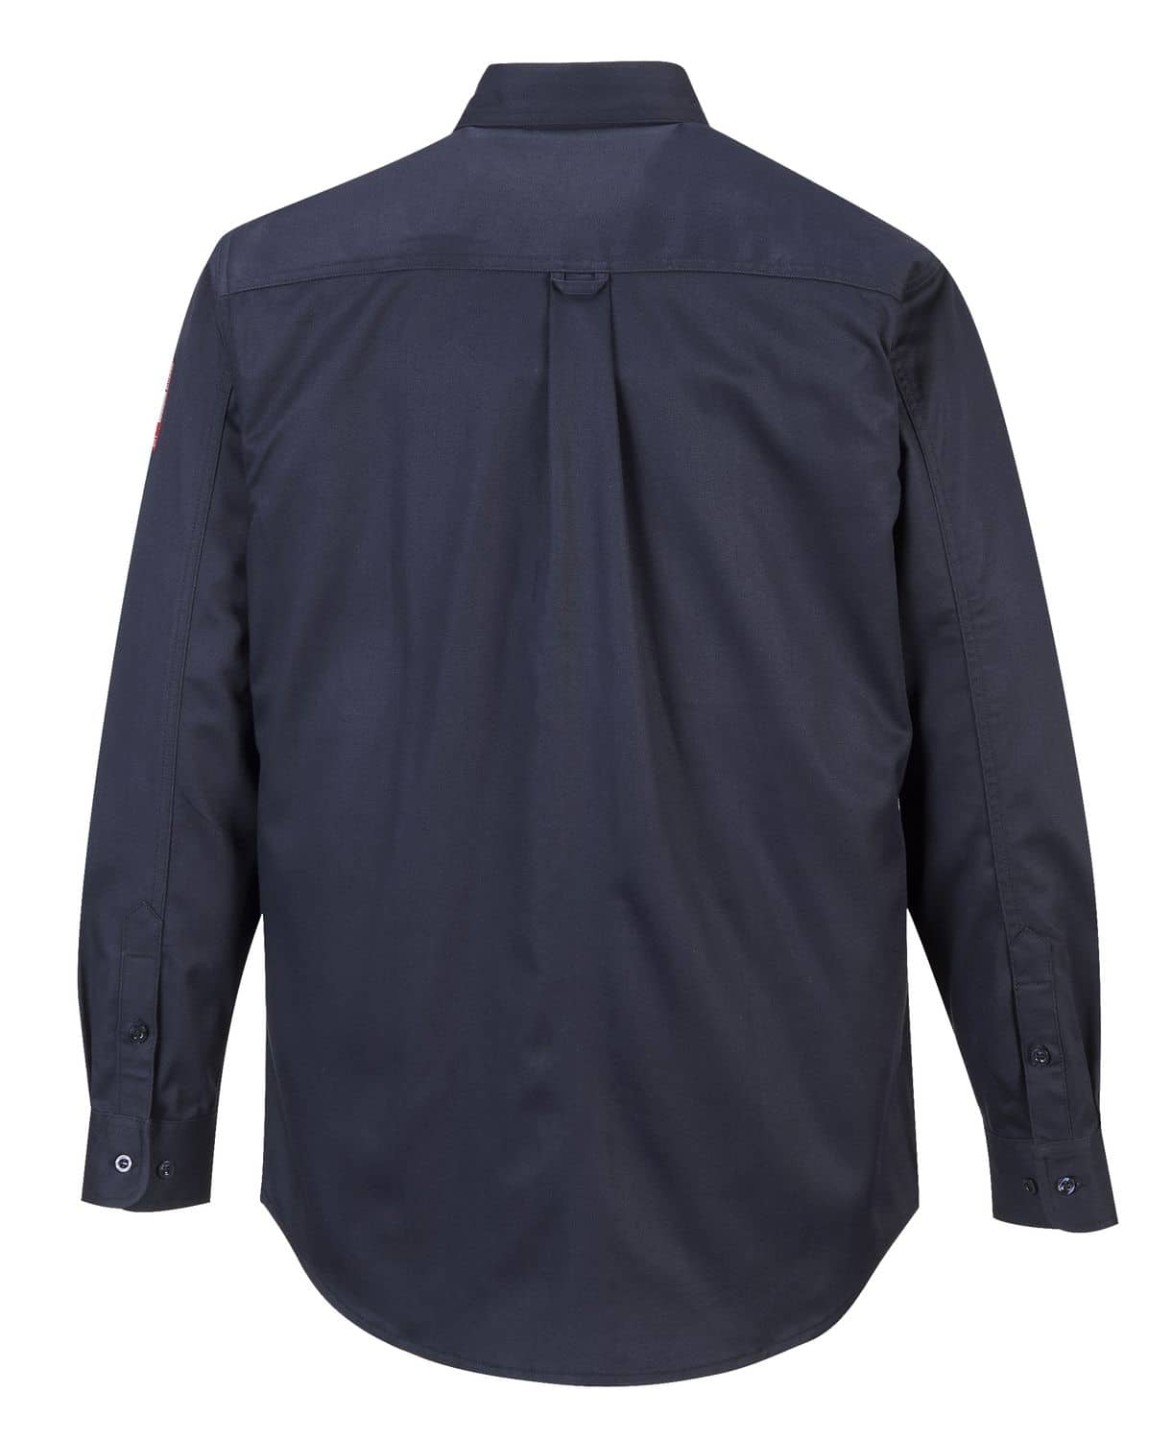 Portwest Bizflame Shirt 88/12 - Industrial Workwear